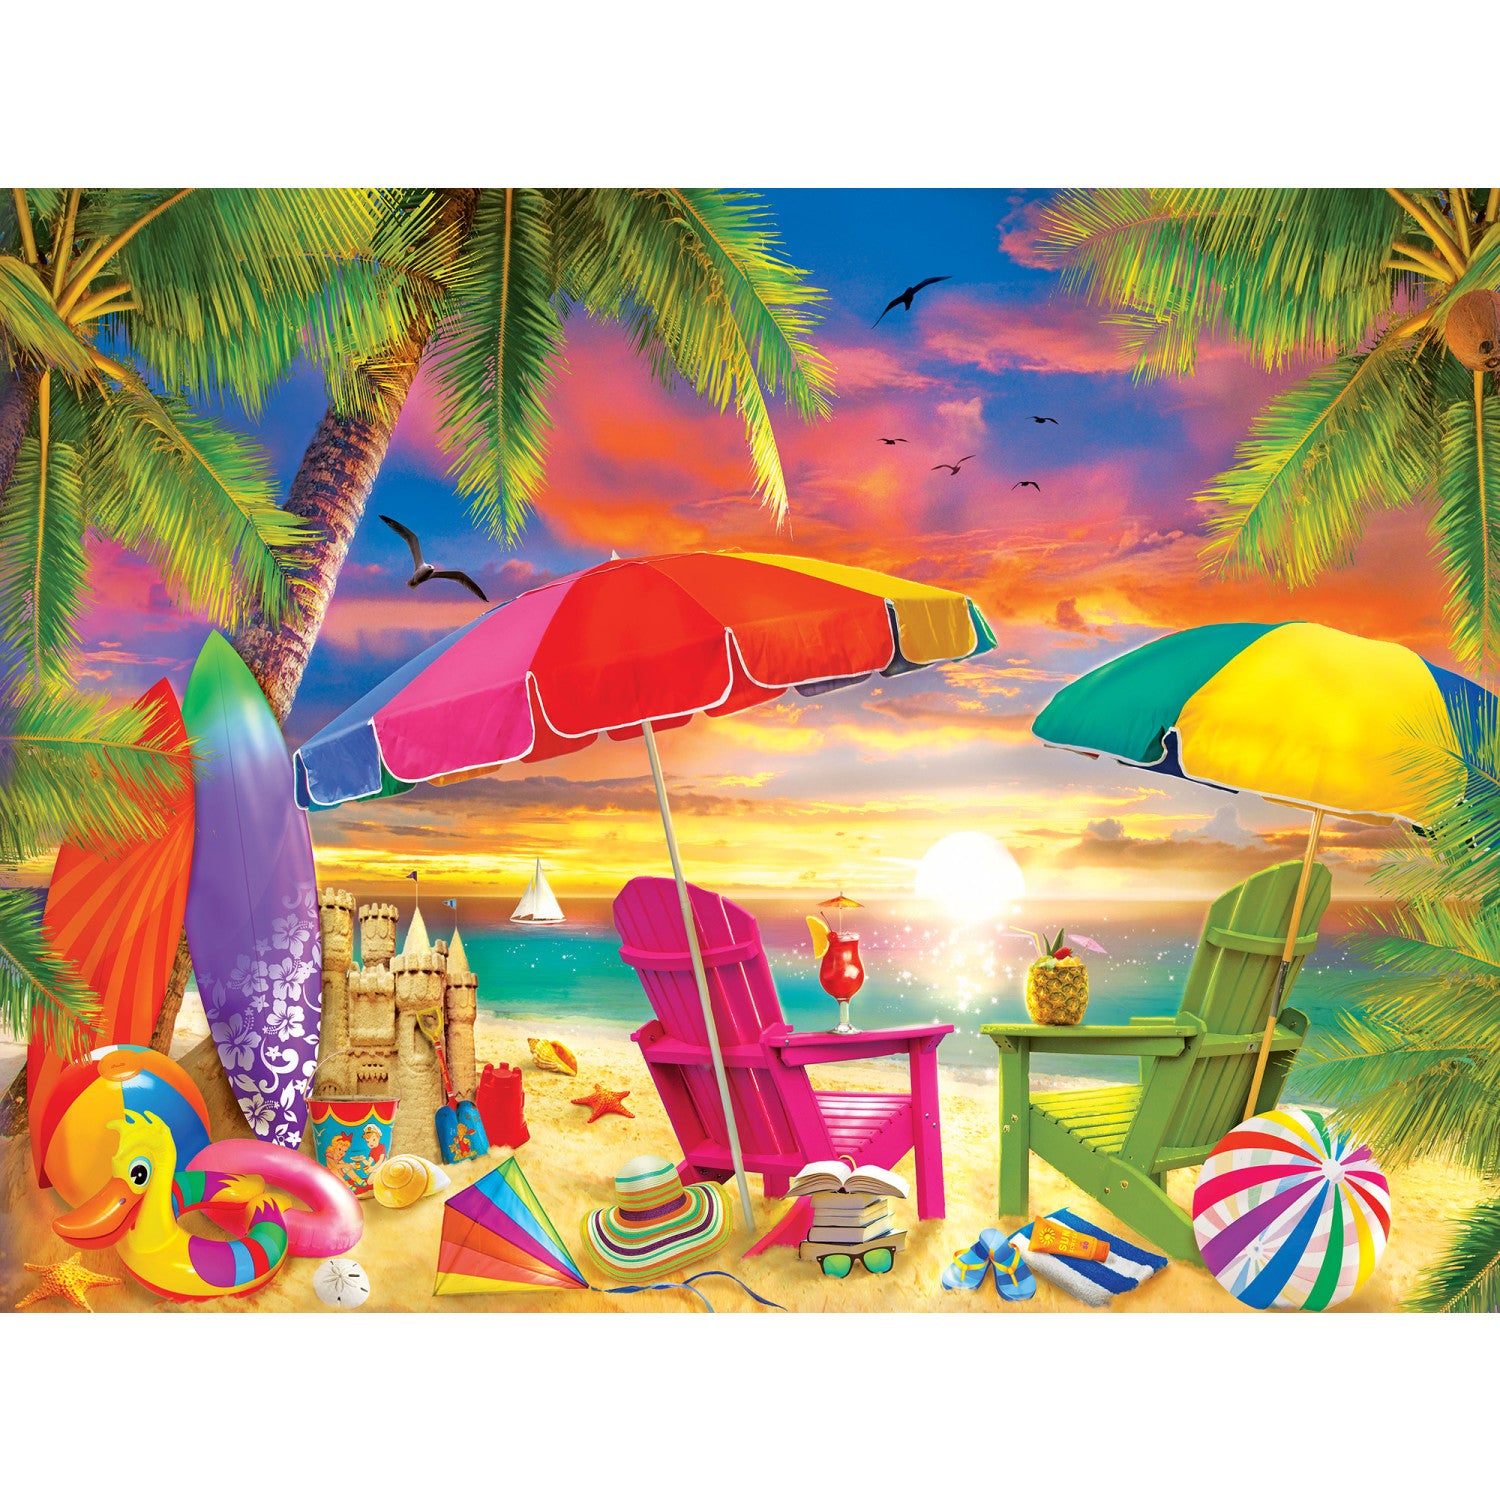 Tropics - Seaside Afternoon 300 Piece Puzzle